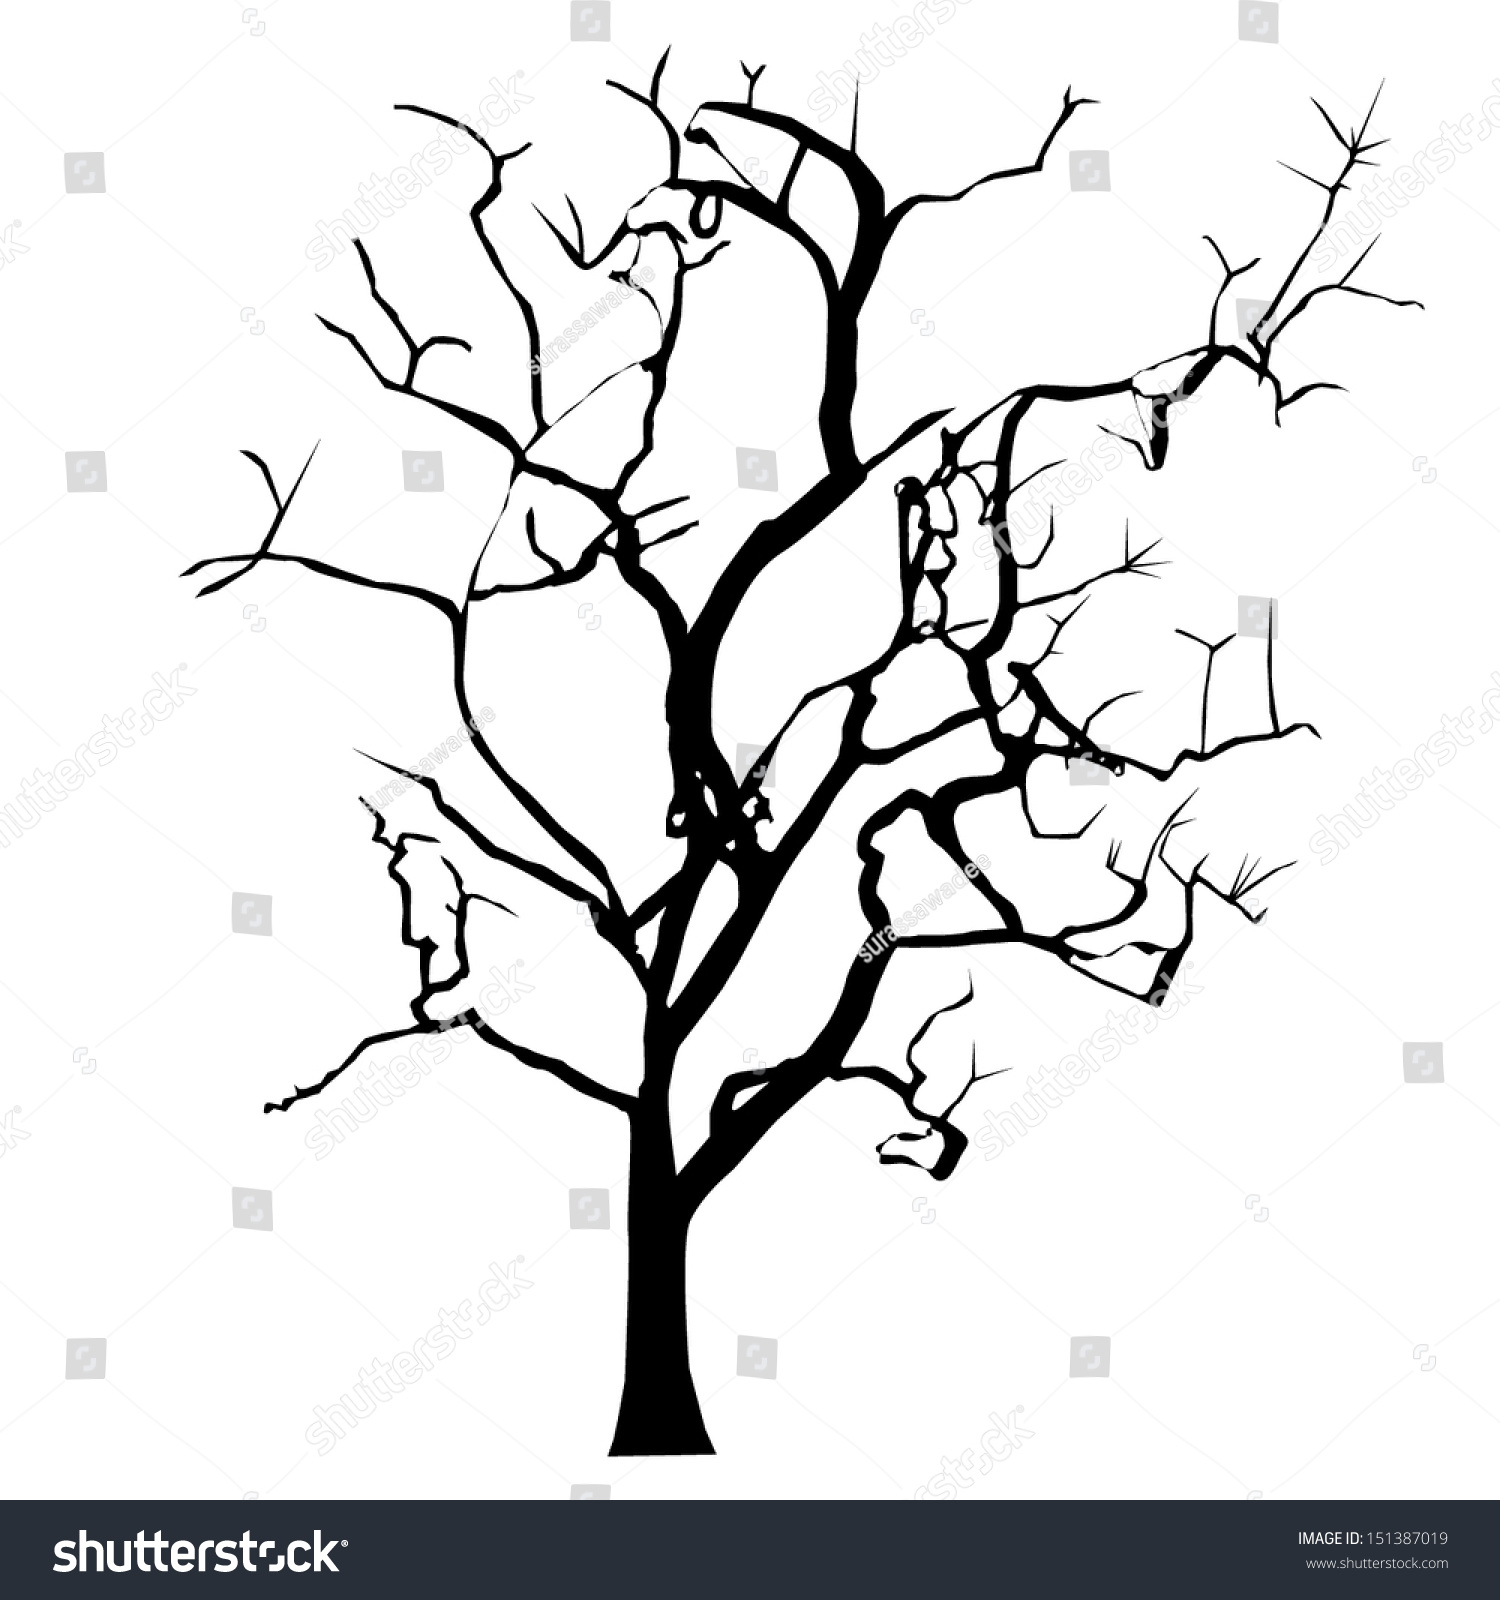 Vector Black Silhouette Of A Bare Tree - 151387019 : Shutterstock